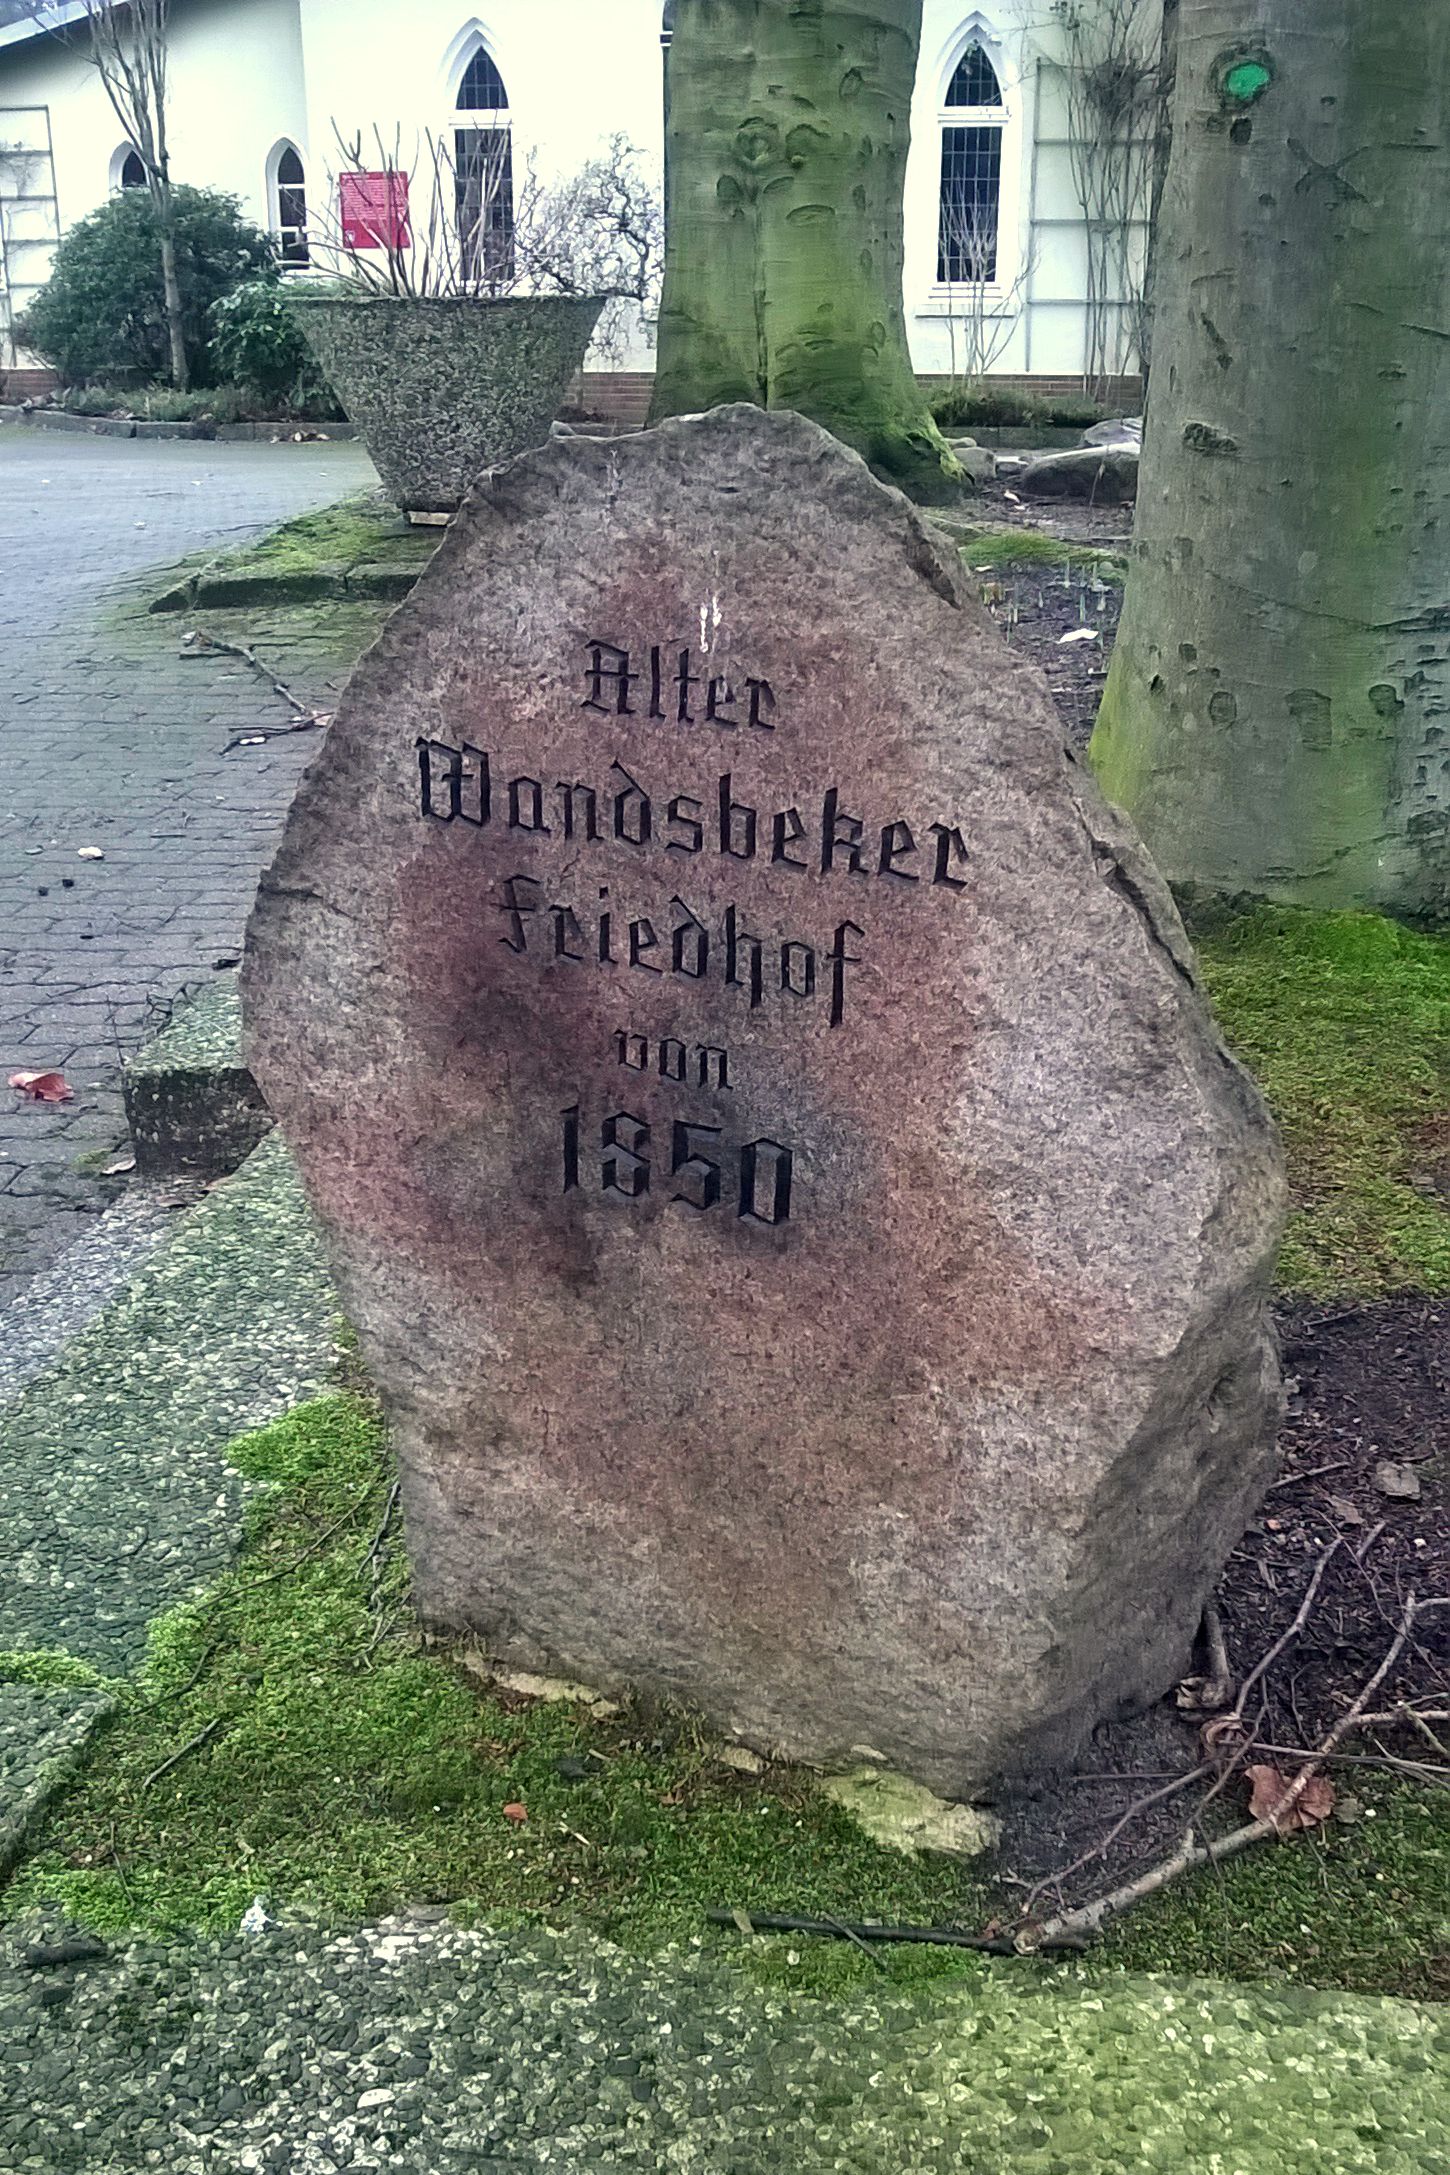 File:Alter Friedhof Wandsbek Stein.jpg - Wikimedia Commons